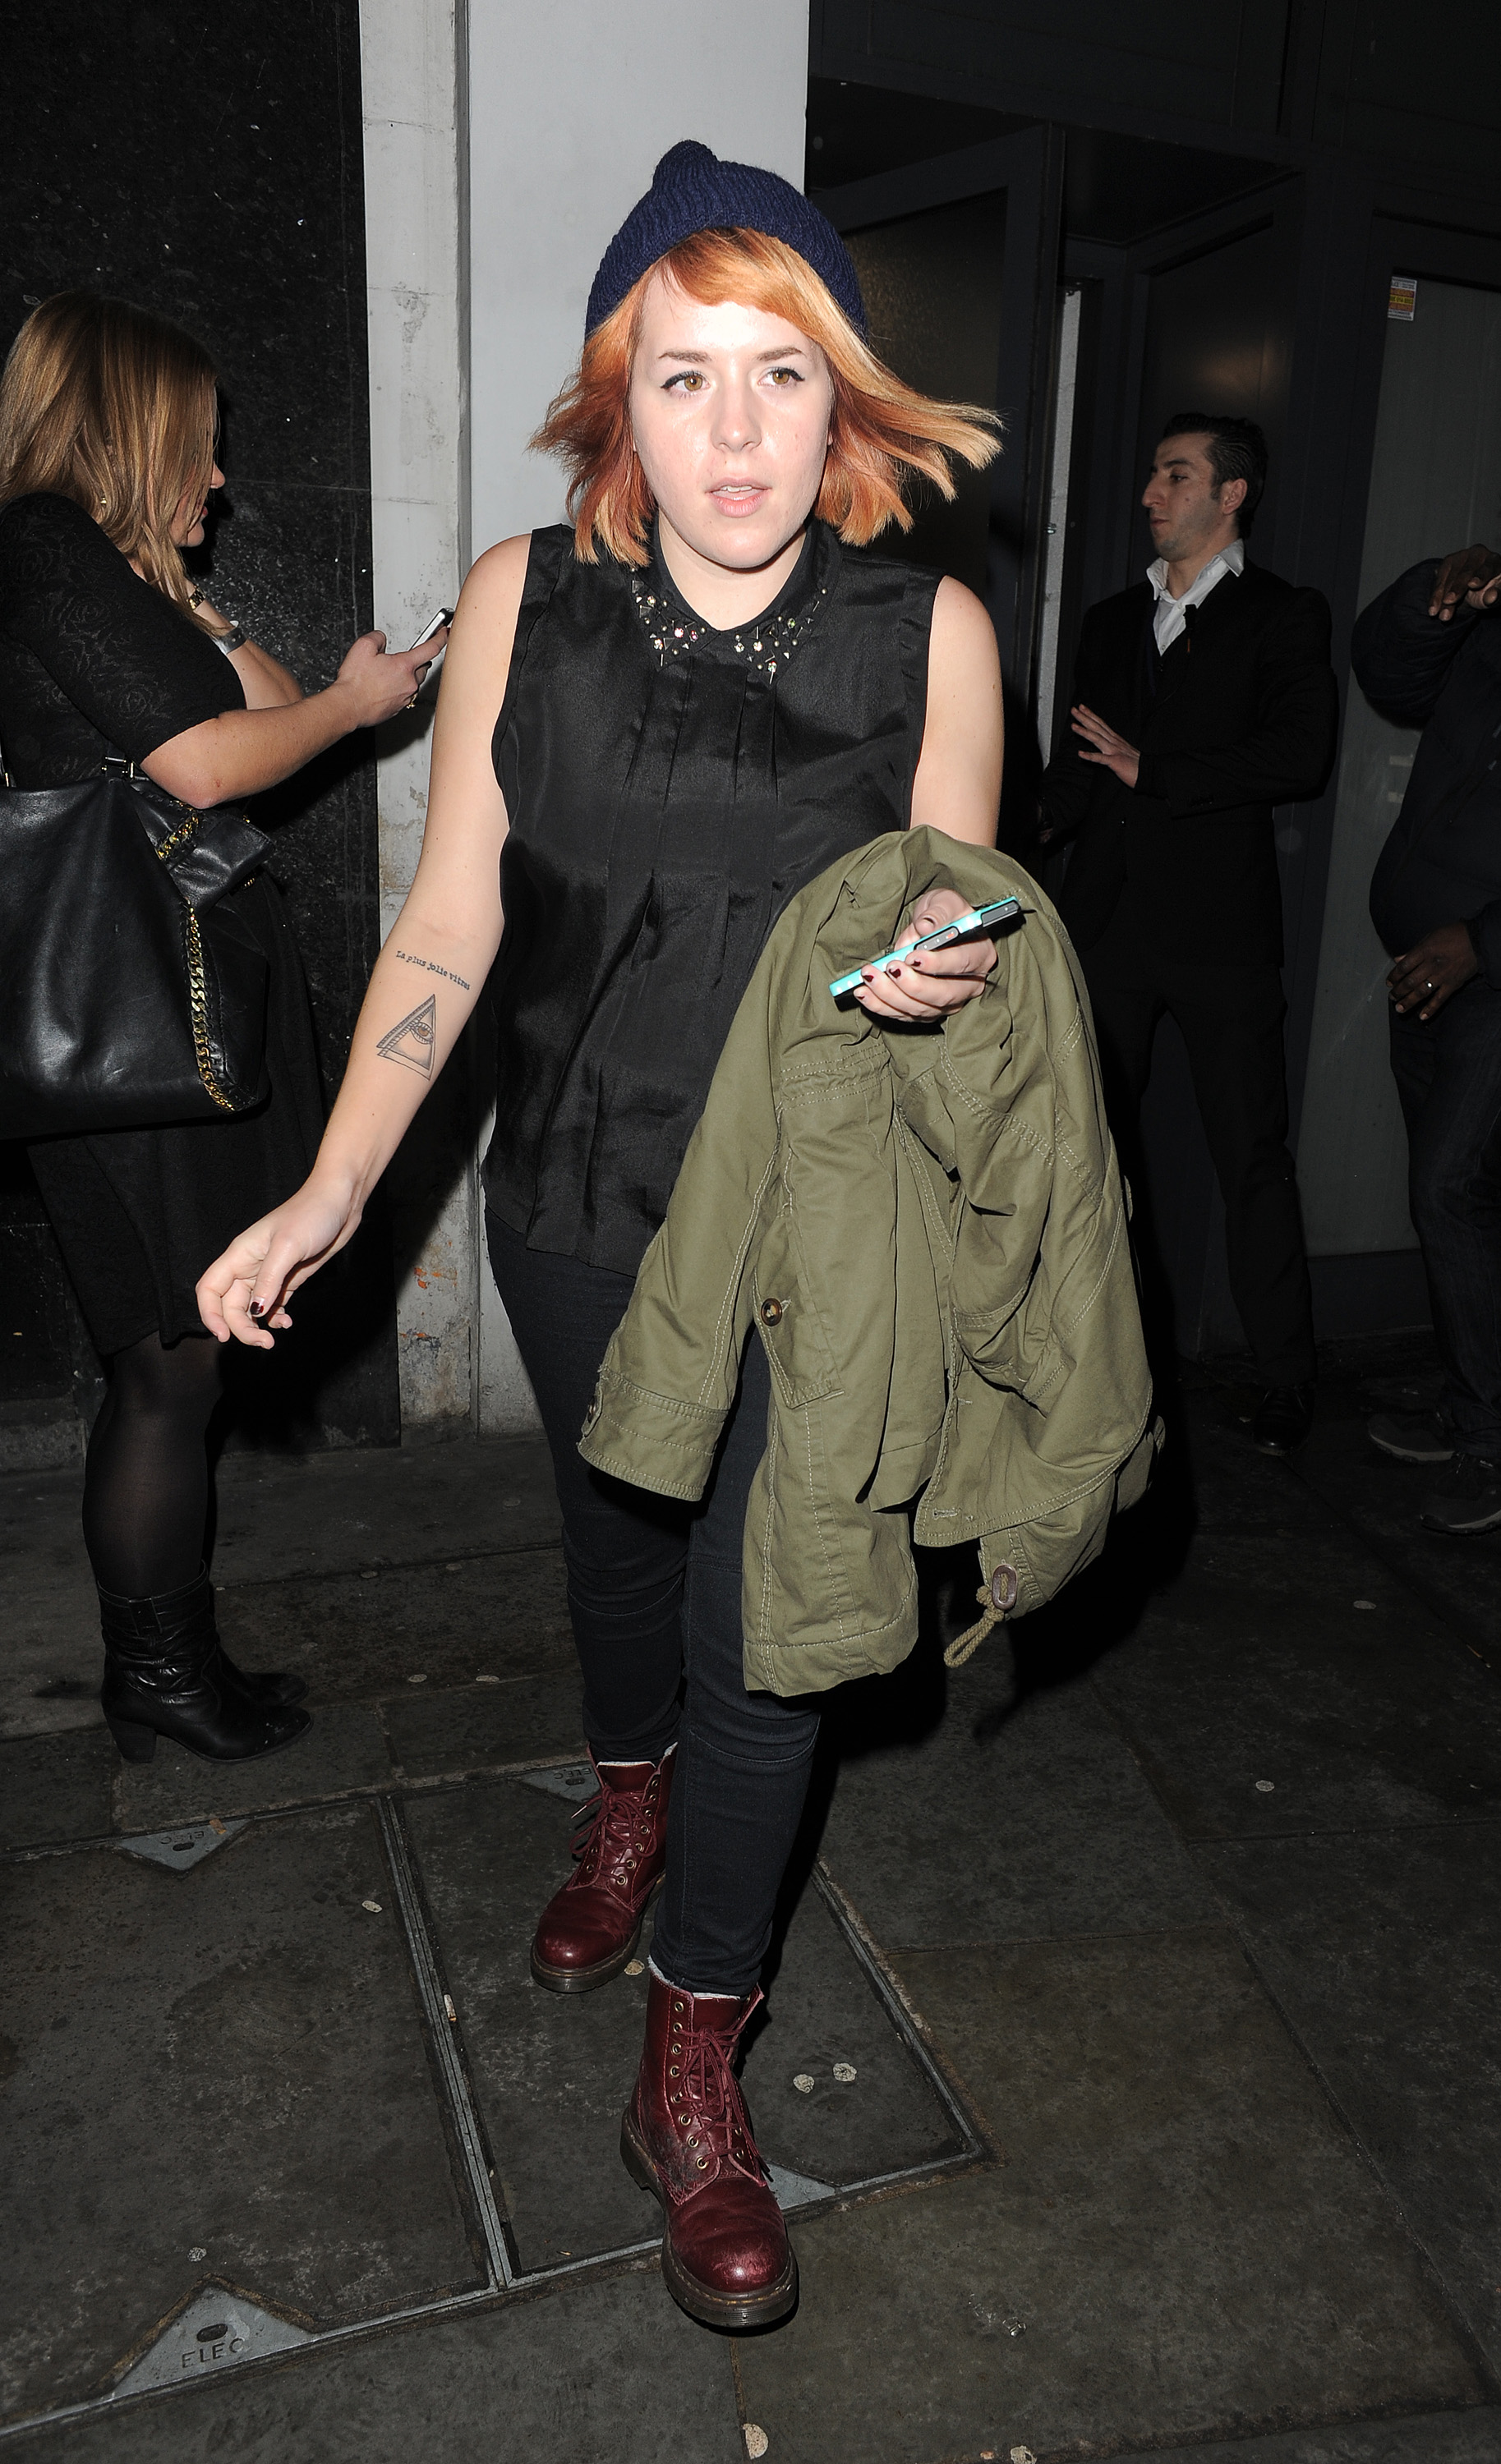 Isabella Cruise leaving Boujis nightclub in London in 2013 | Source: Getty Images